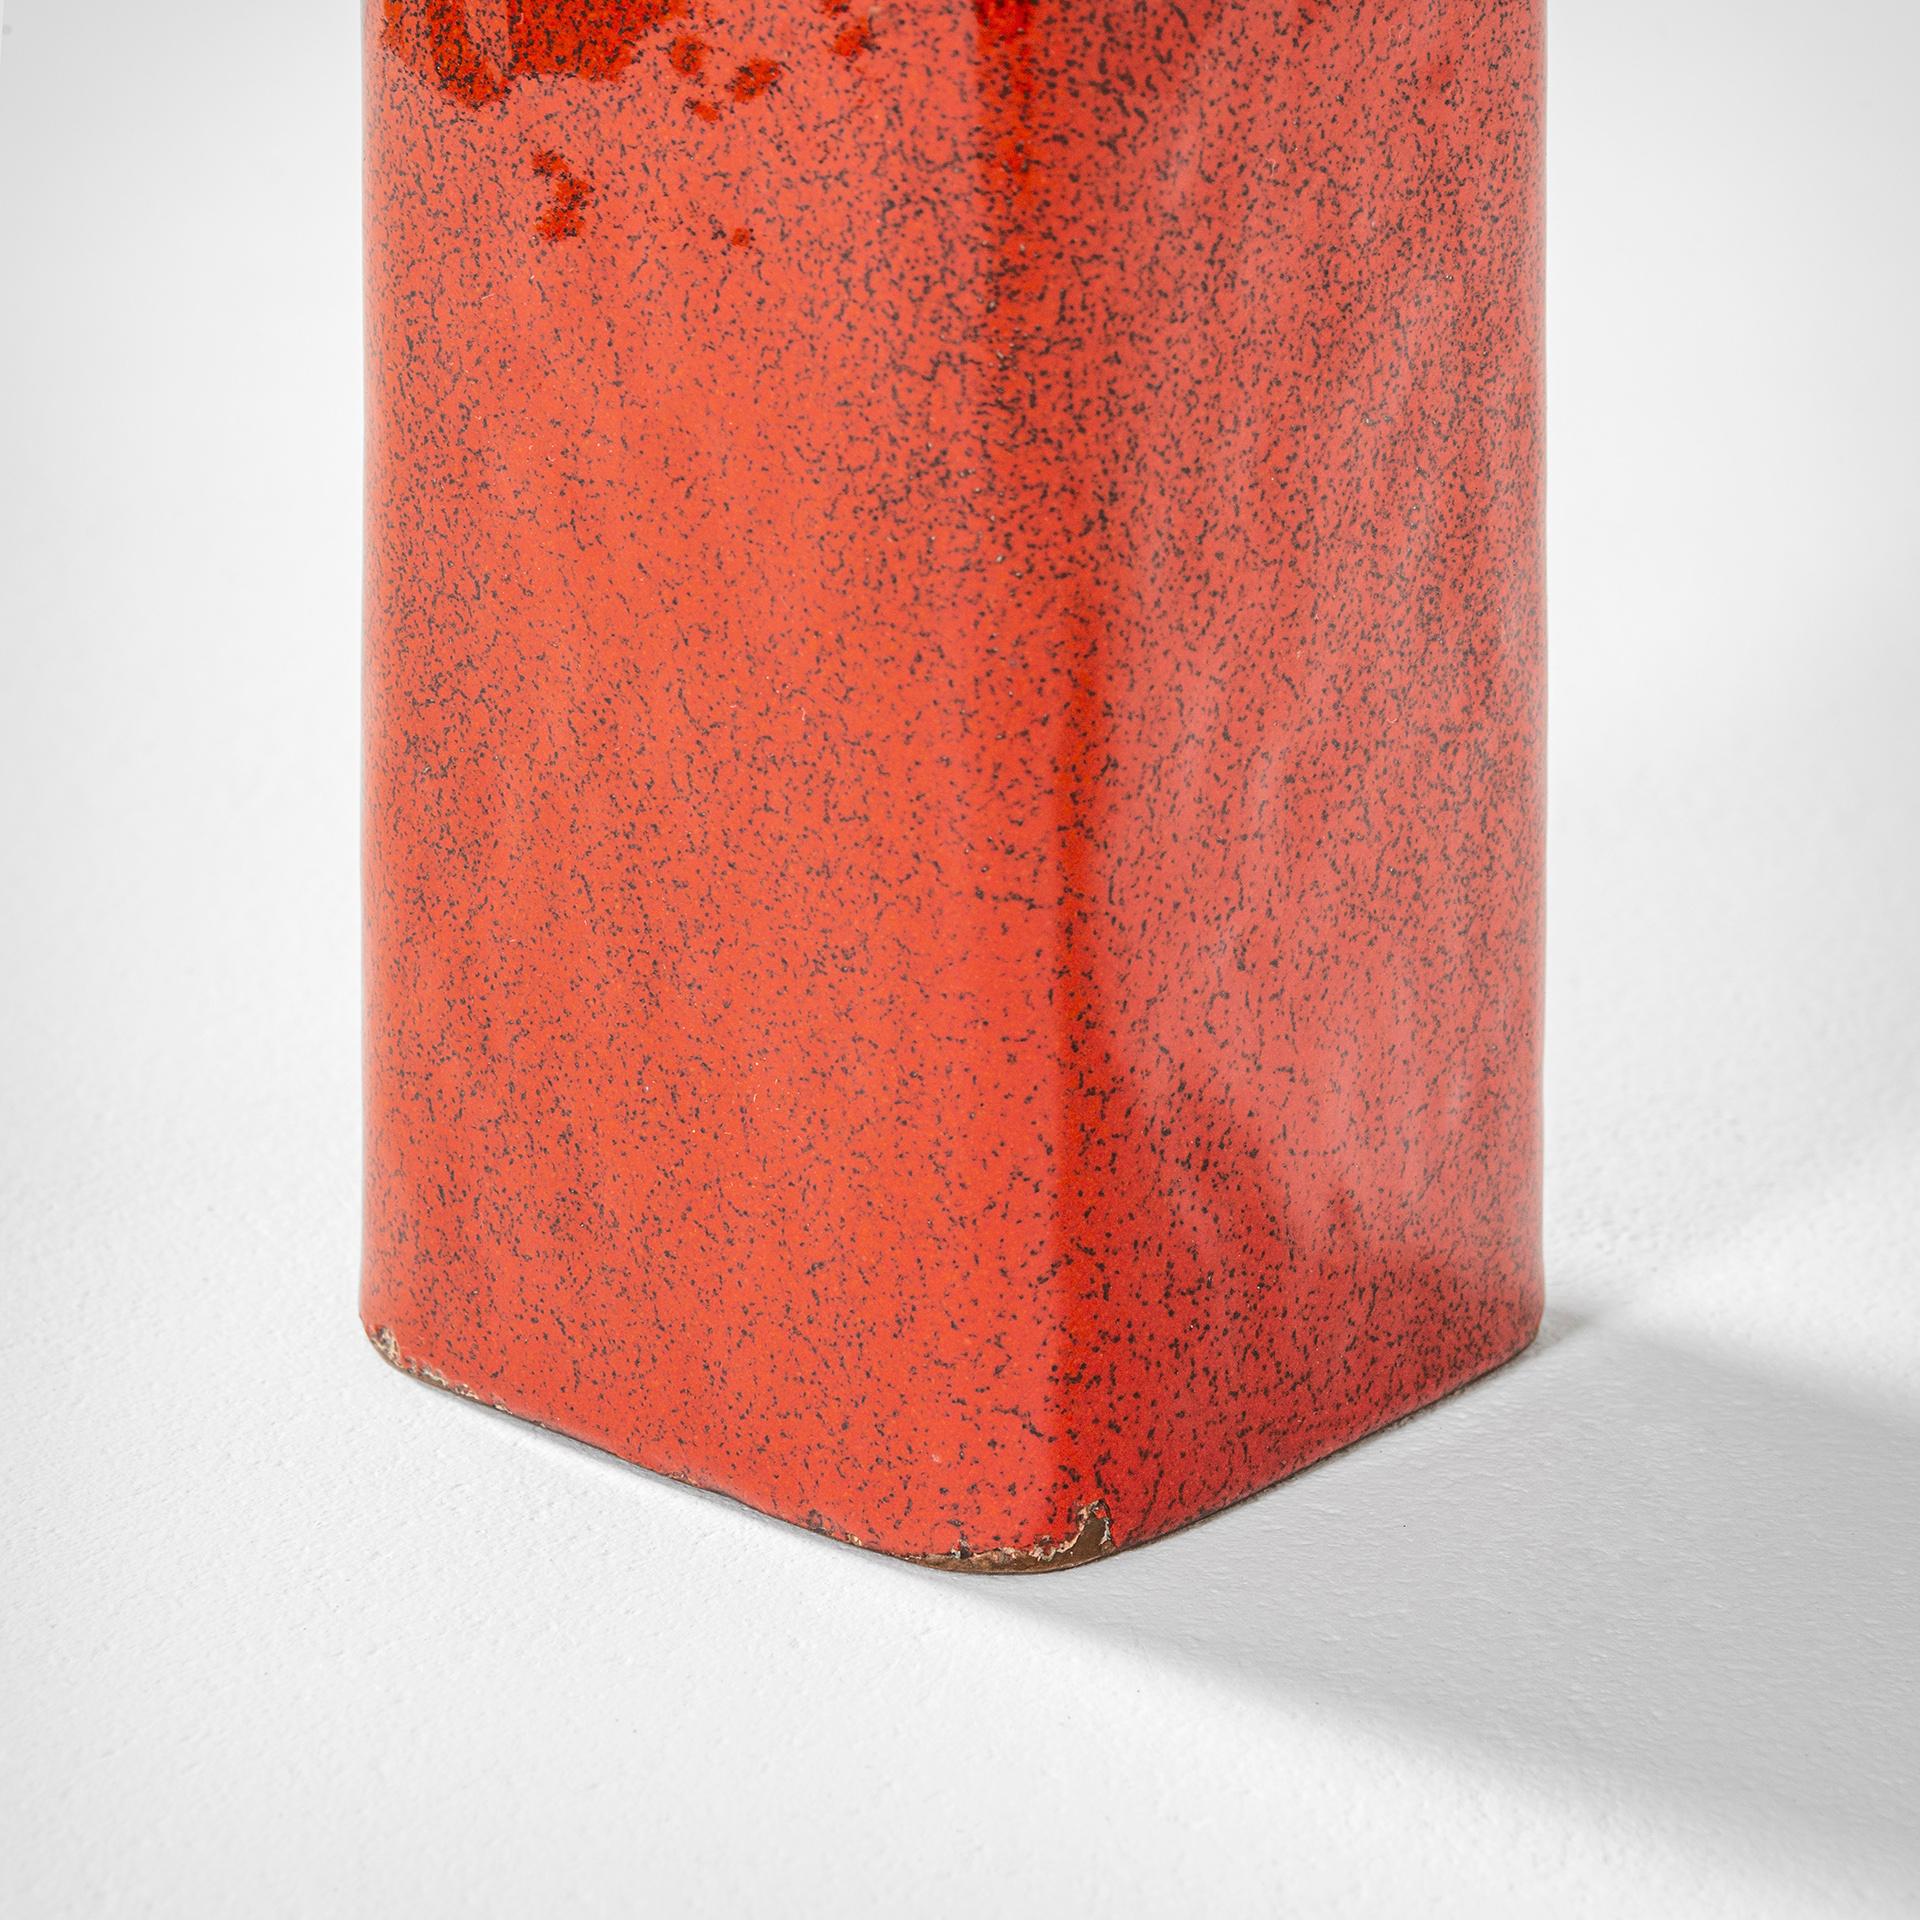 Italian 20th Century Paolo De Poli Copper Vase in Red Enamel with signature 1950